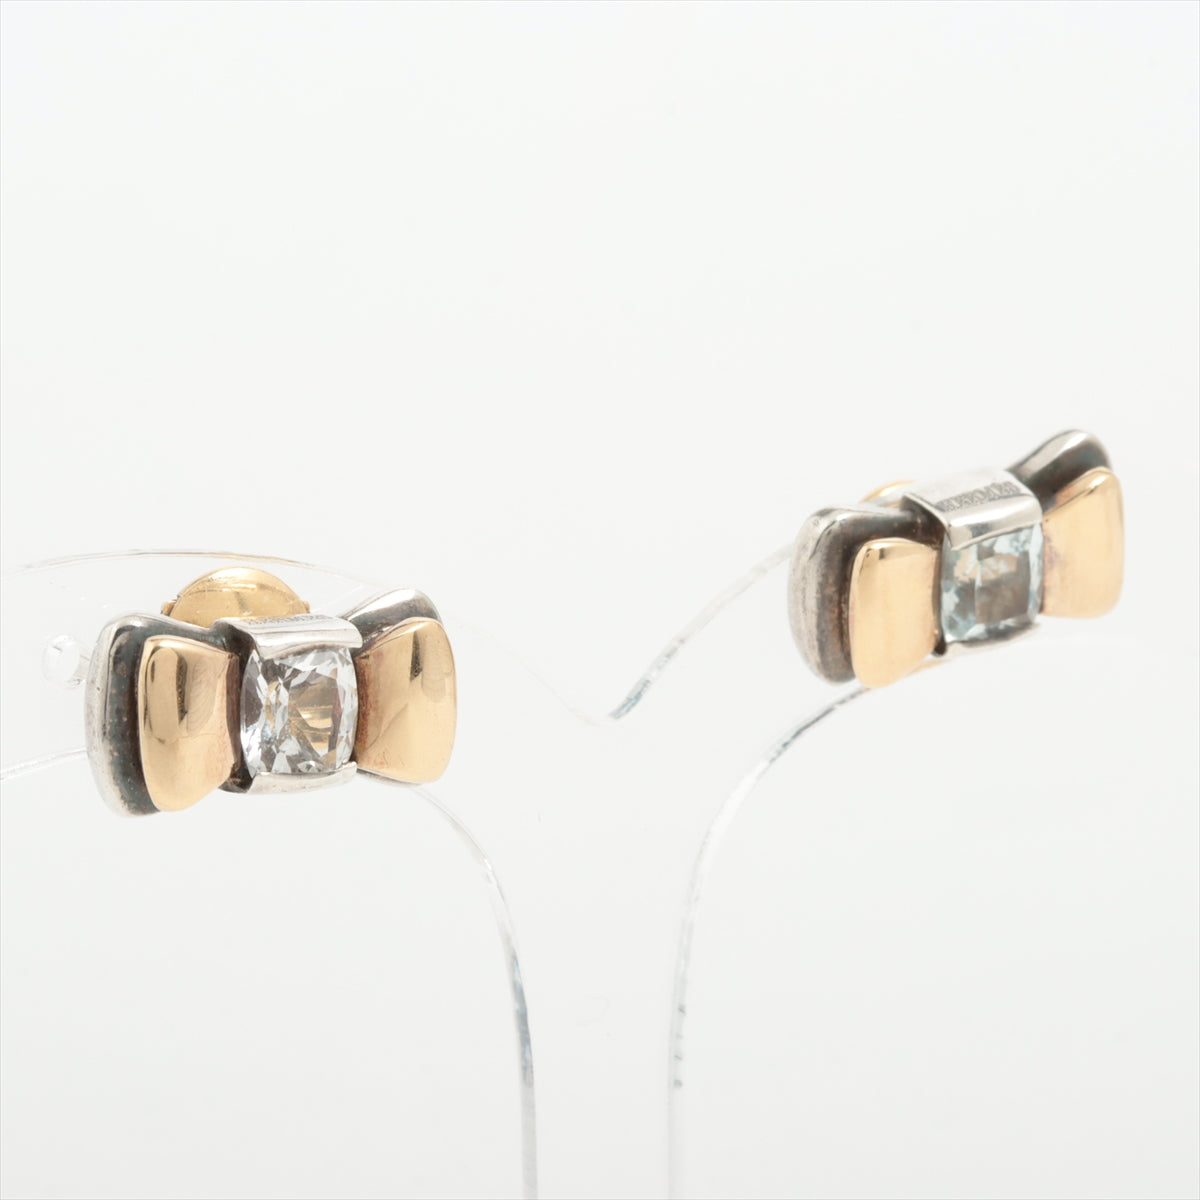 Hermès Ribbon Piercing jewelry (for both ears) 925×750 8.8g Silver x gold